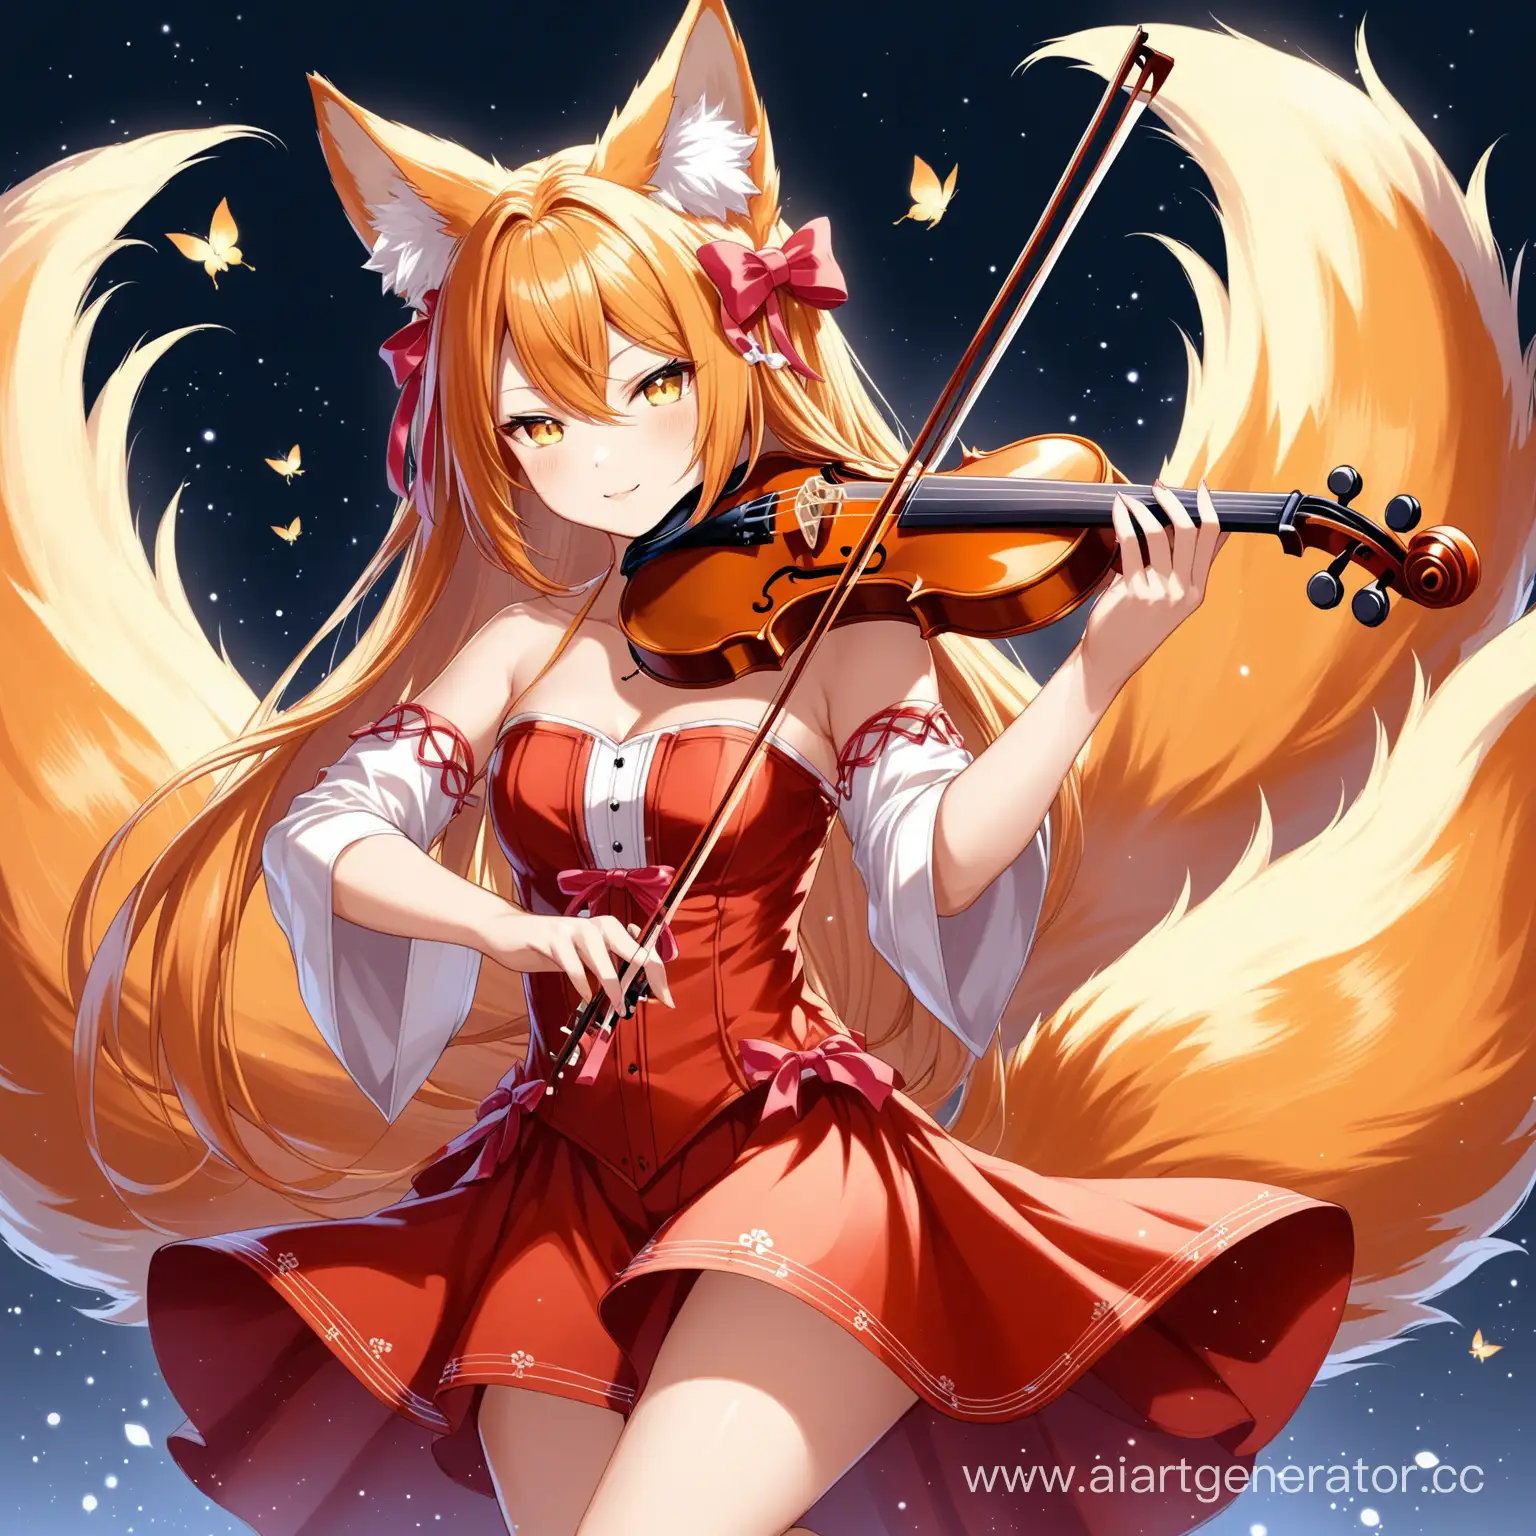 Kitsune violin 
four - tailed female